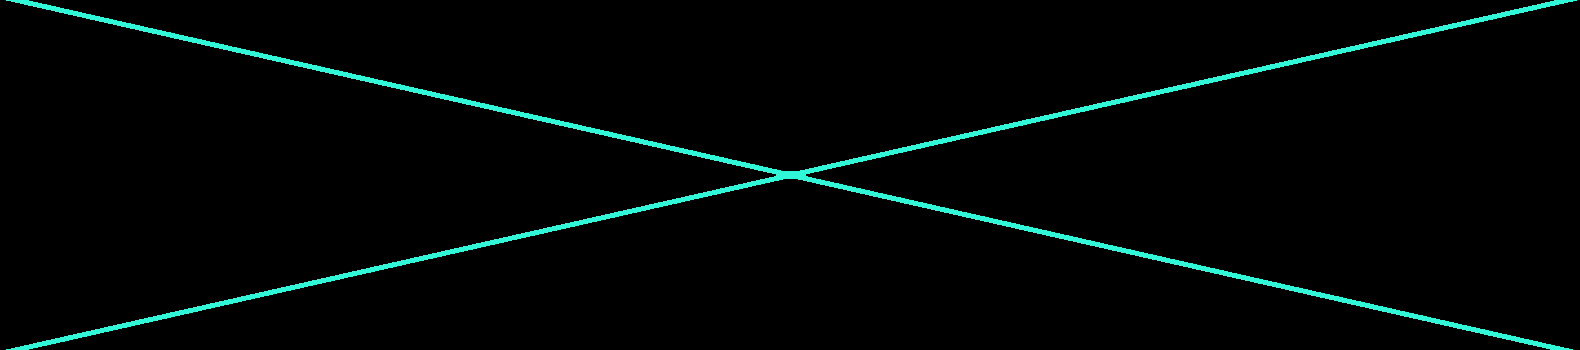 Crisscross  two lines